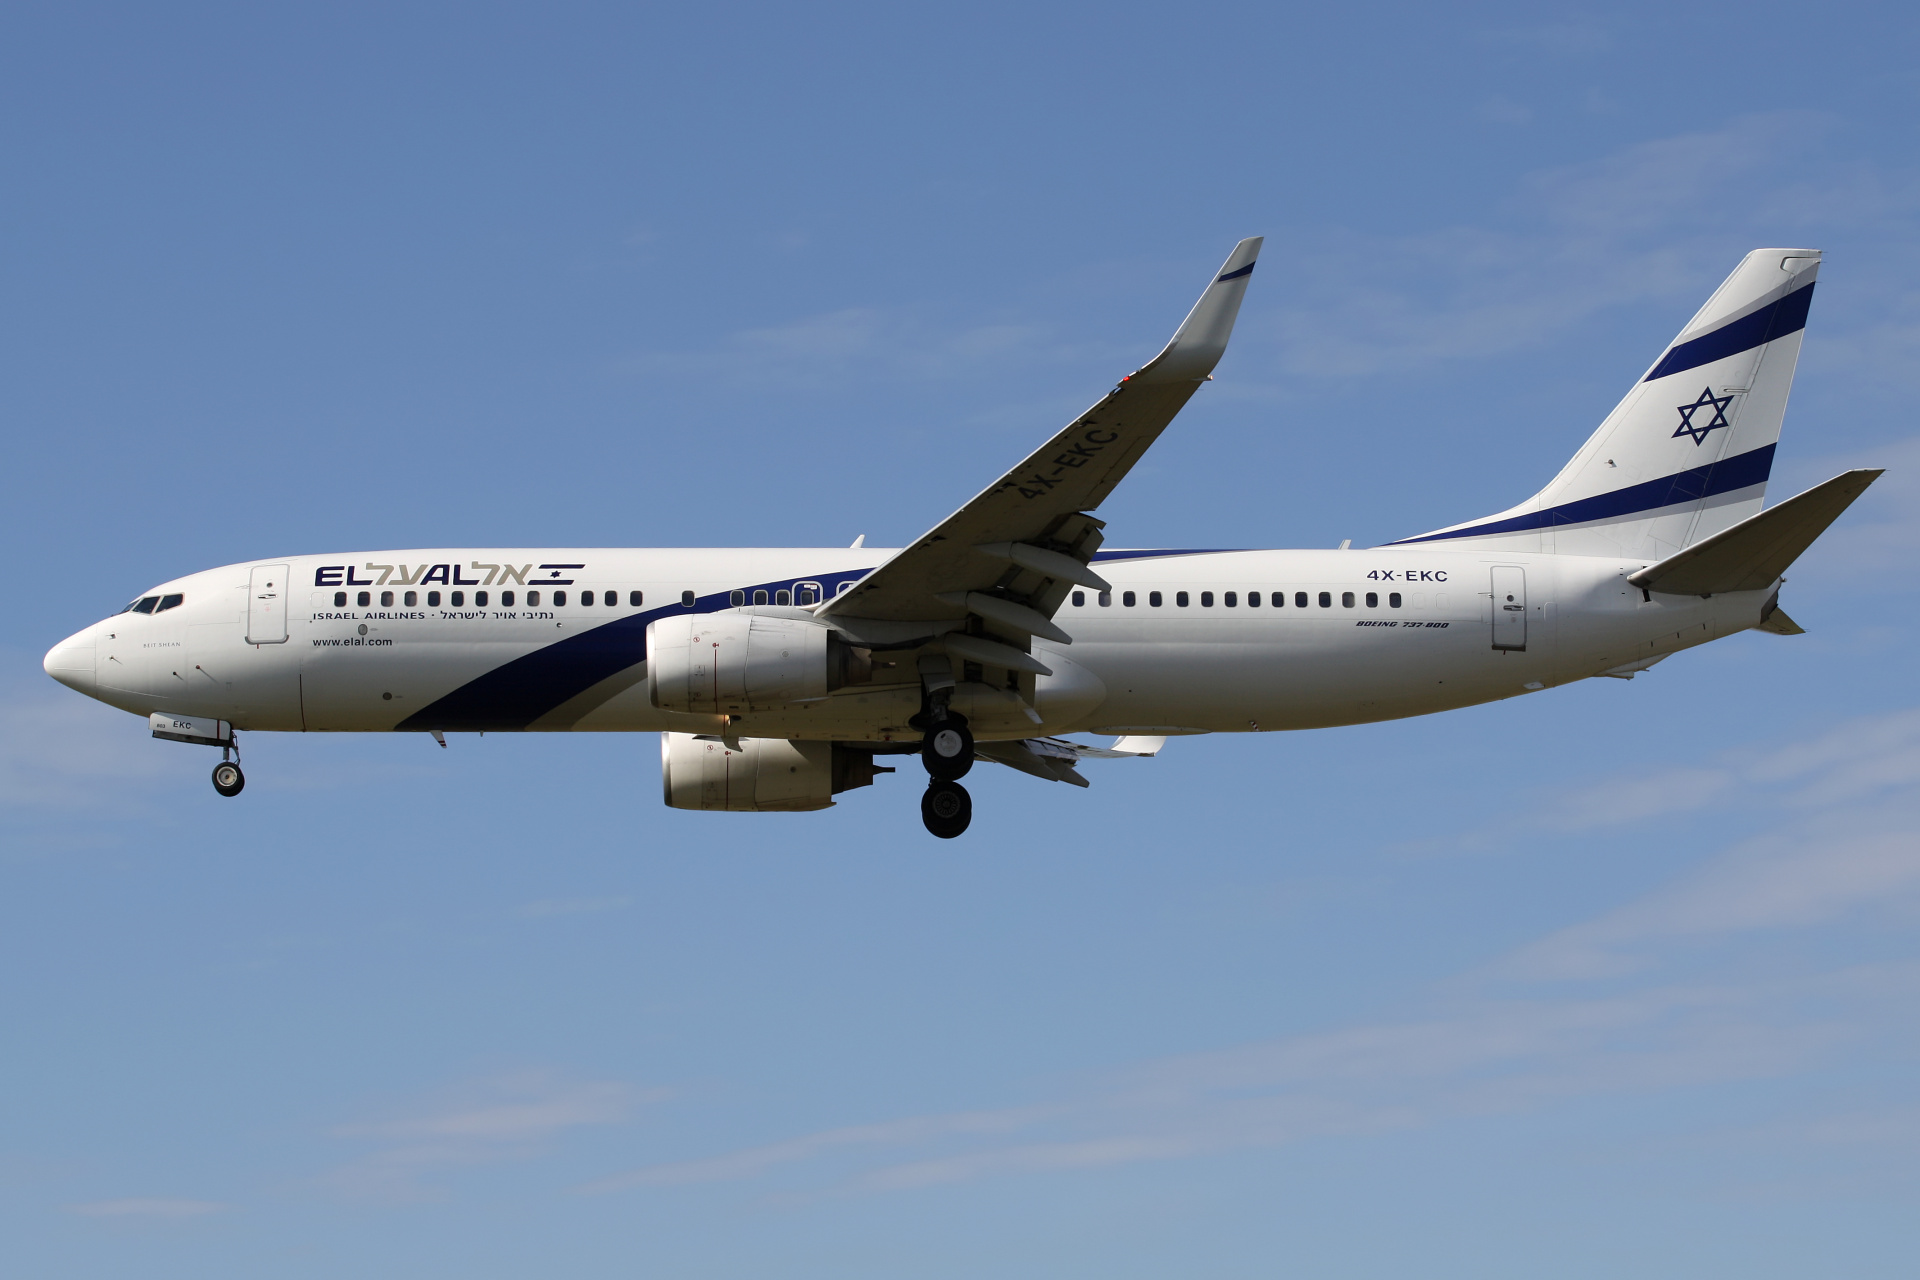 4X-EKC (winglets)  (Aircraft » EPWA Spotting » Boeing 737-800 » El Al Israel Airlines)